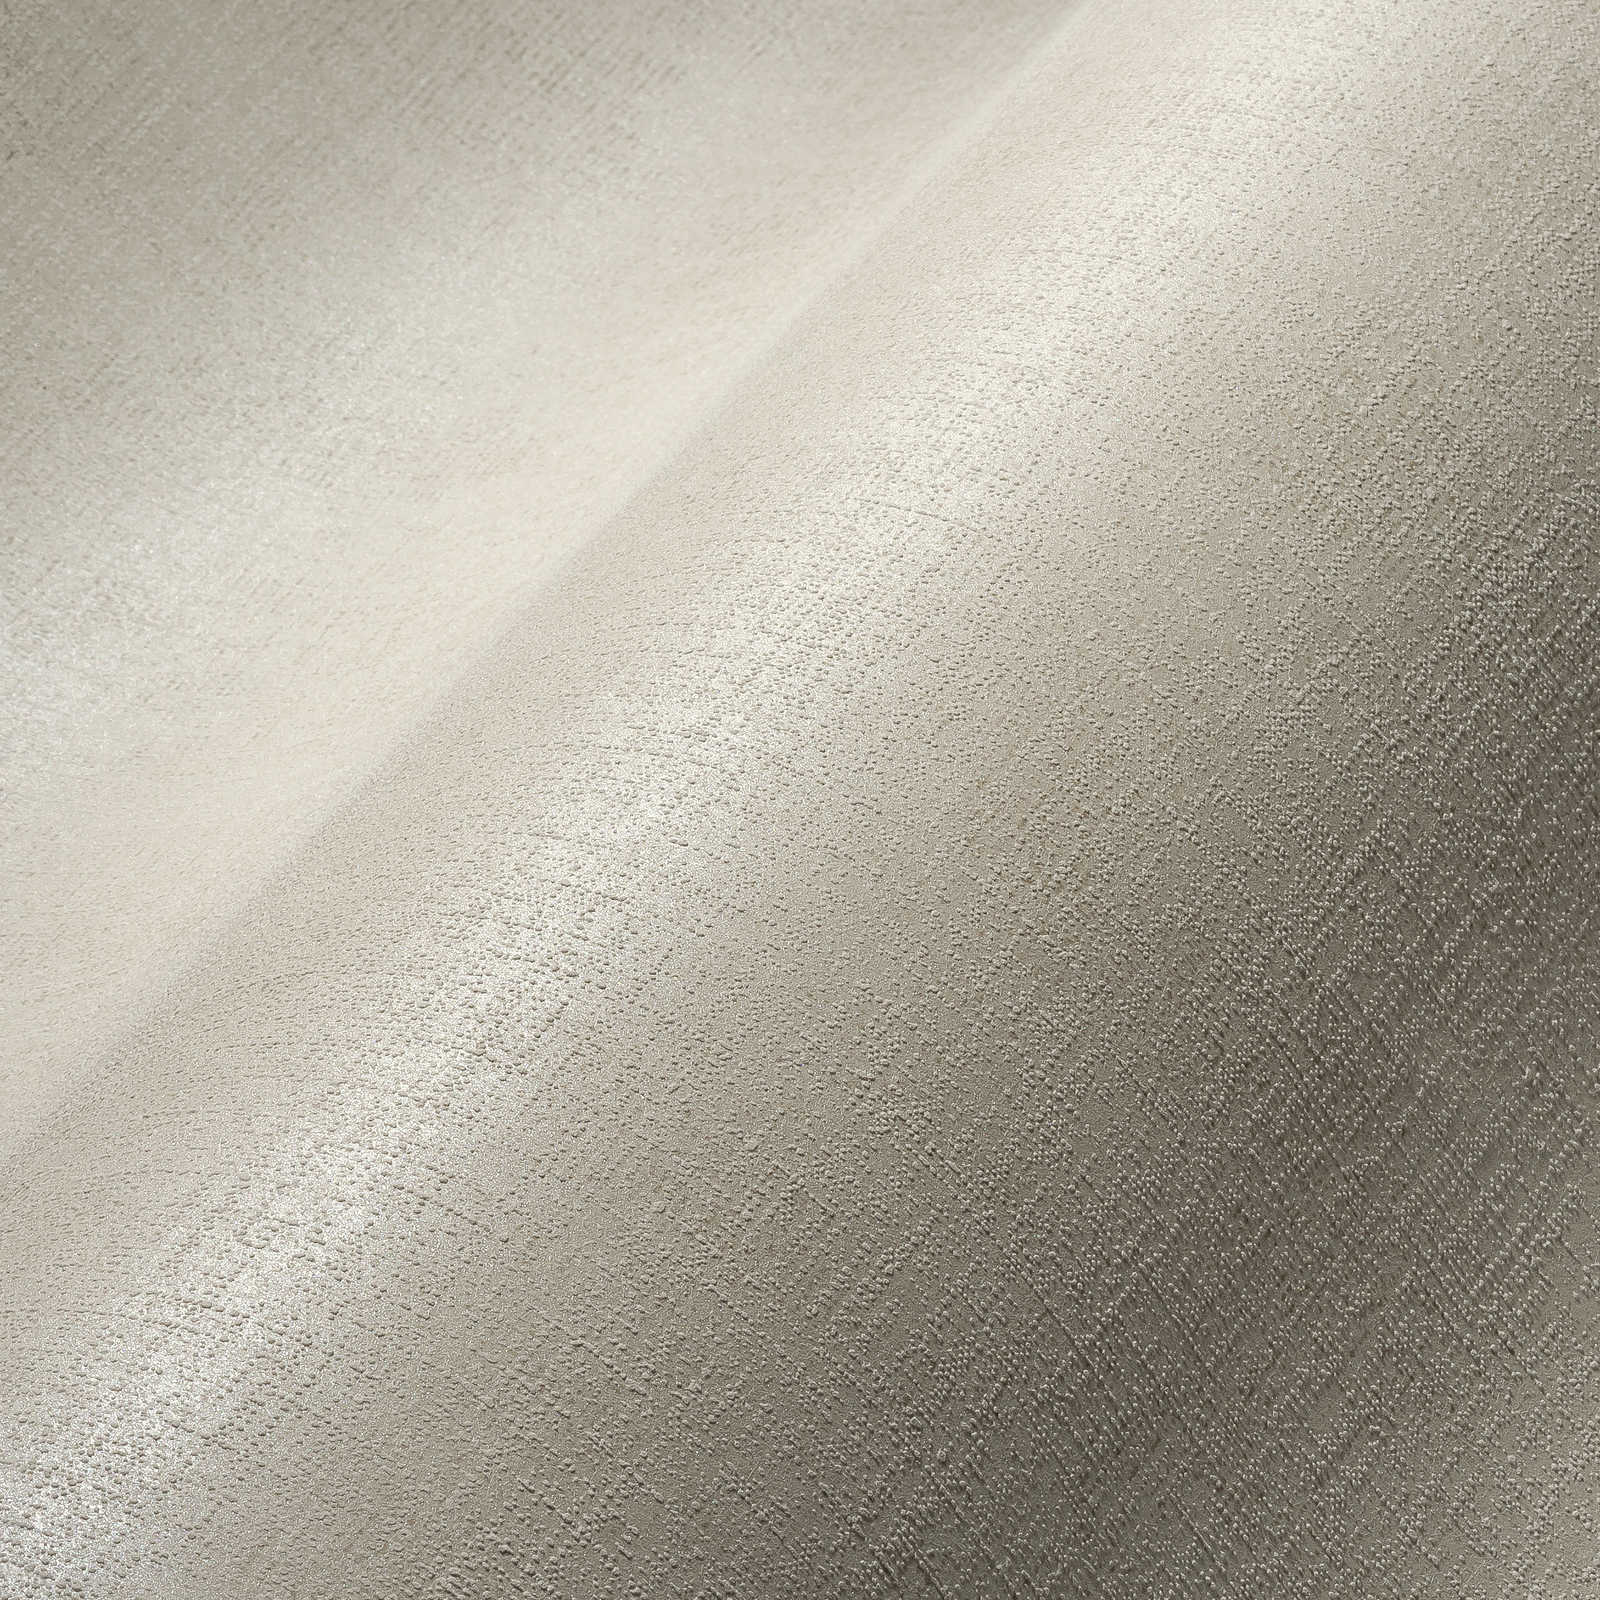             Carta da parati in tessuto bianco crema con finitura lucida - Bianco
        